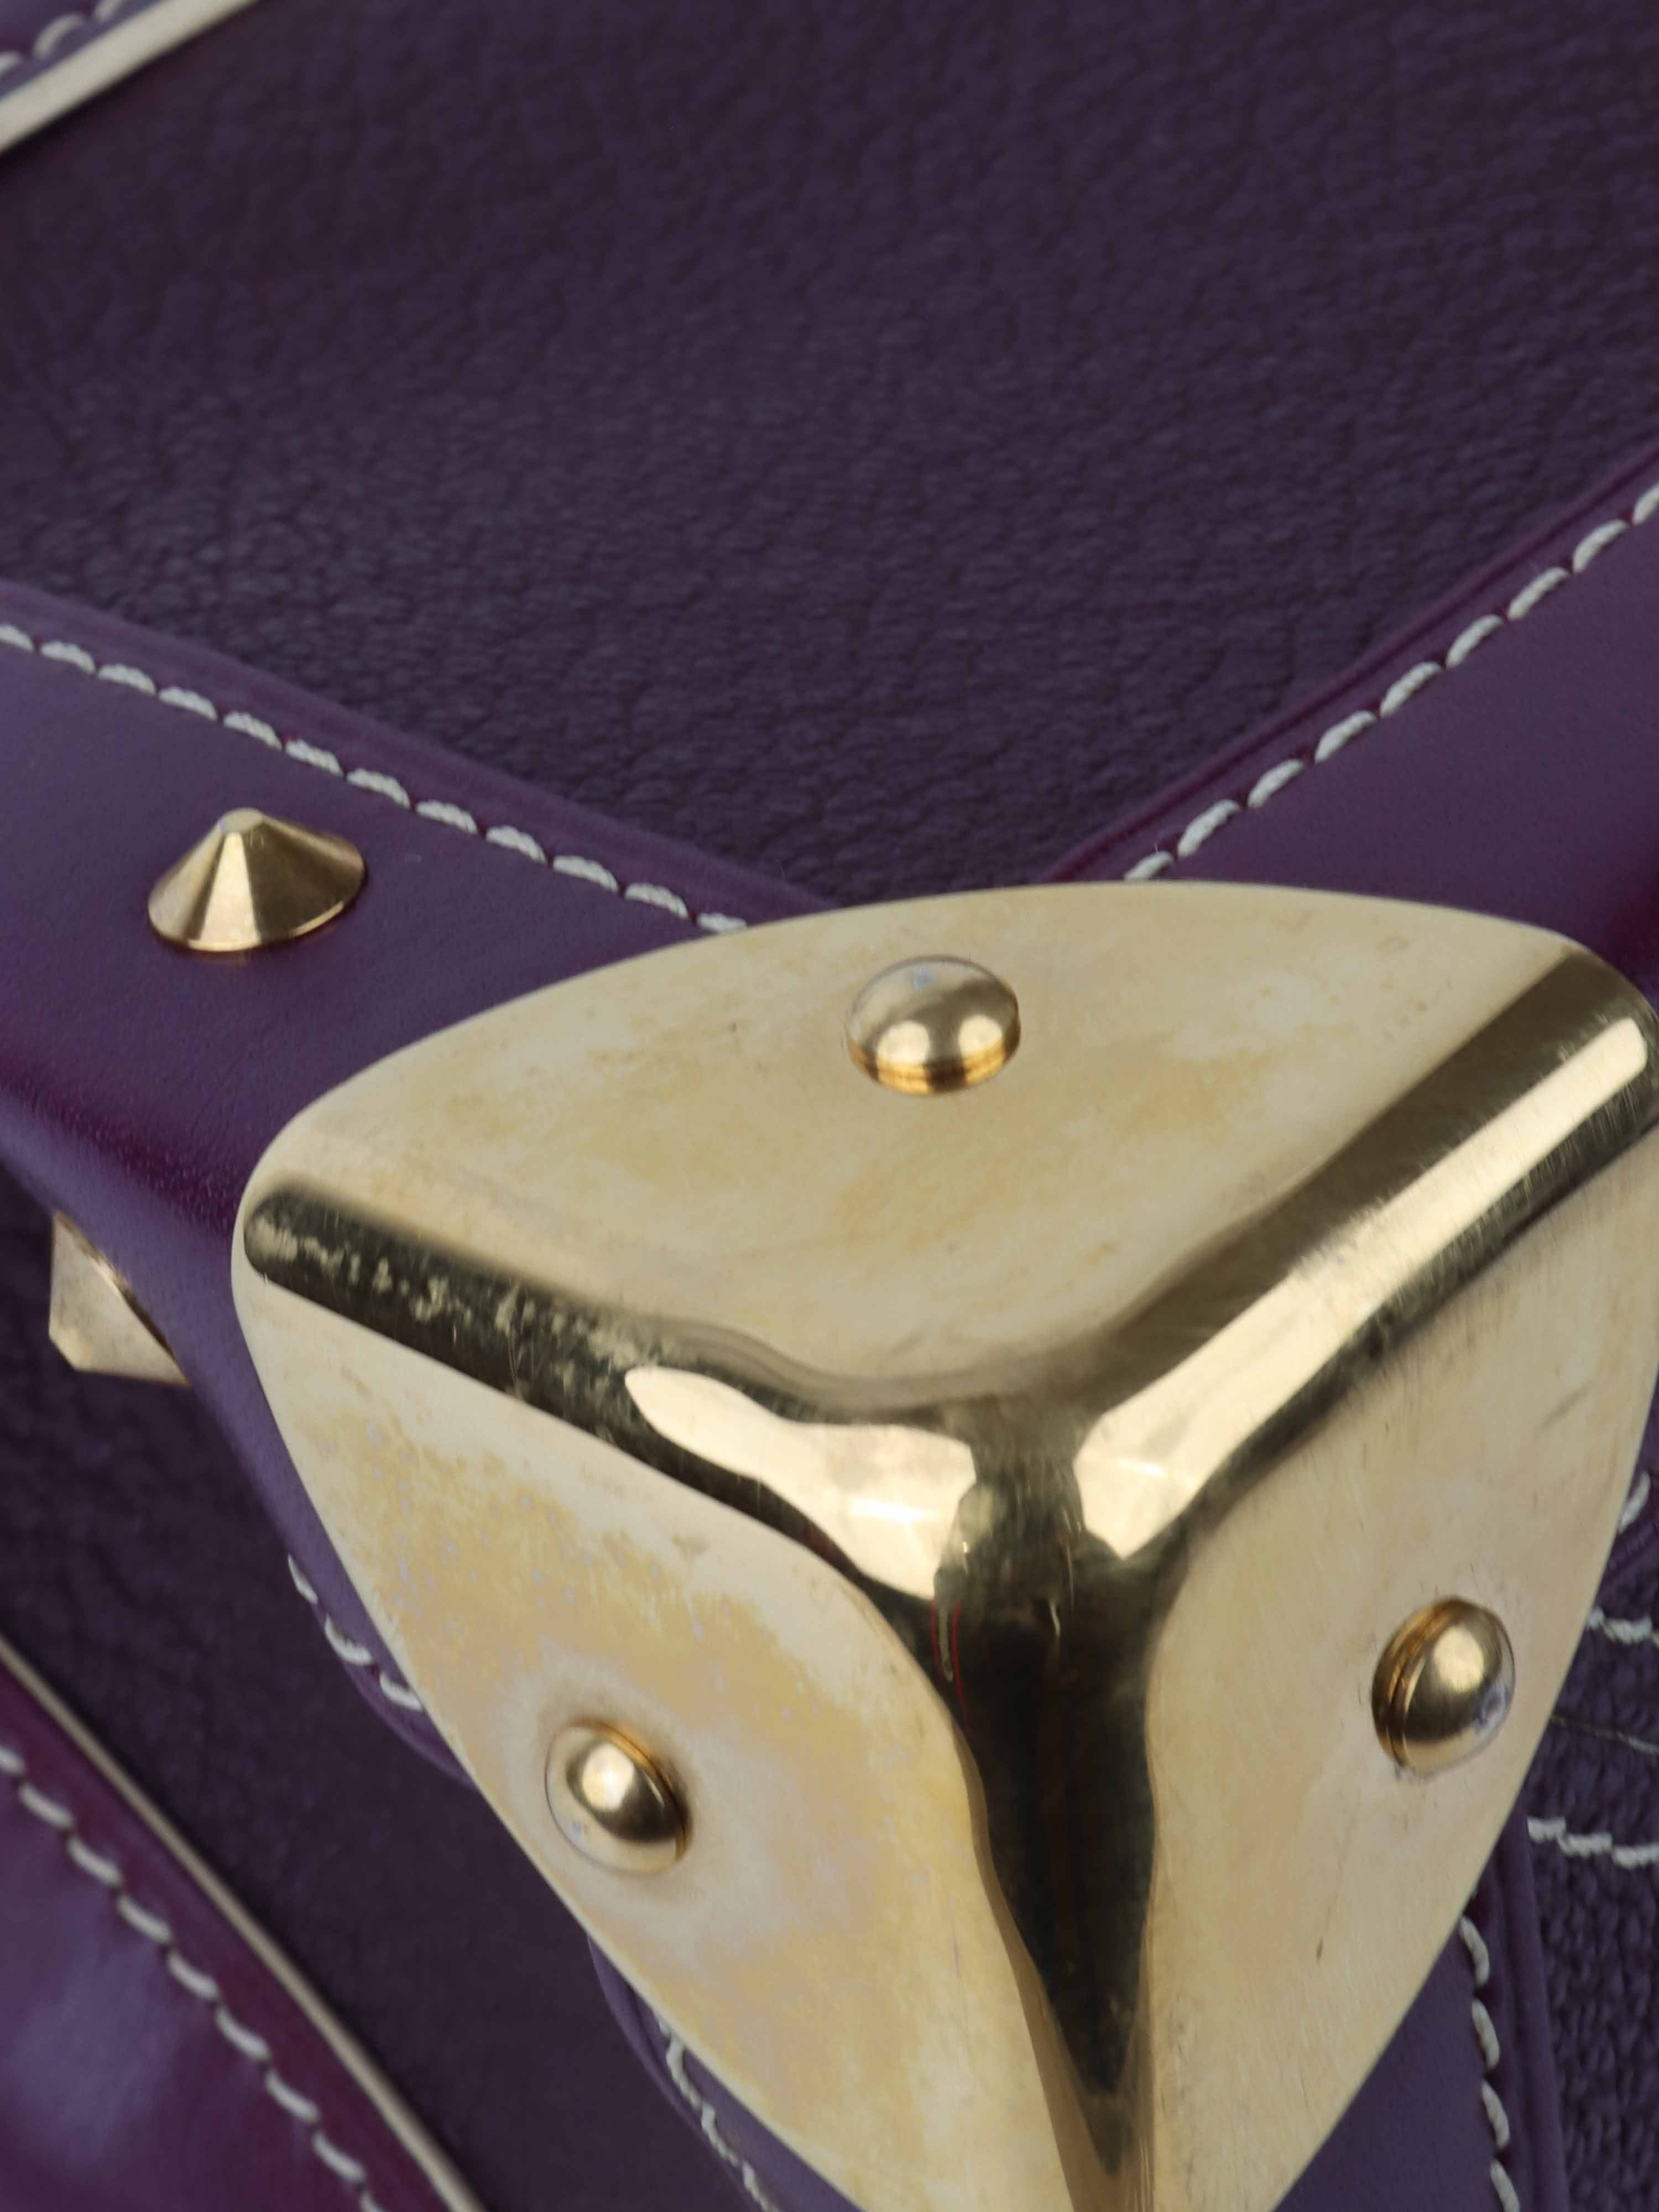 Louis Vuitton Plum Sugali Leather L’Aimable Bag